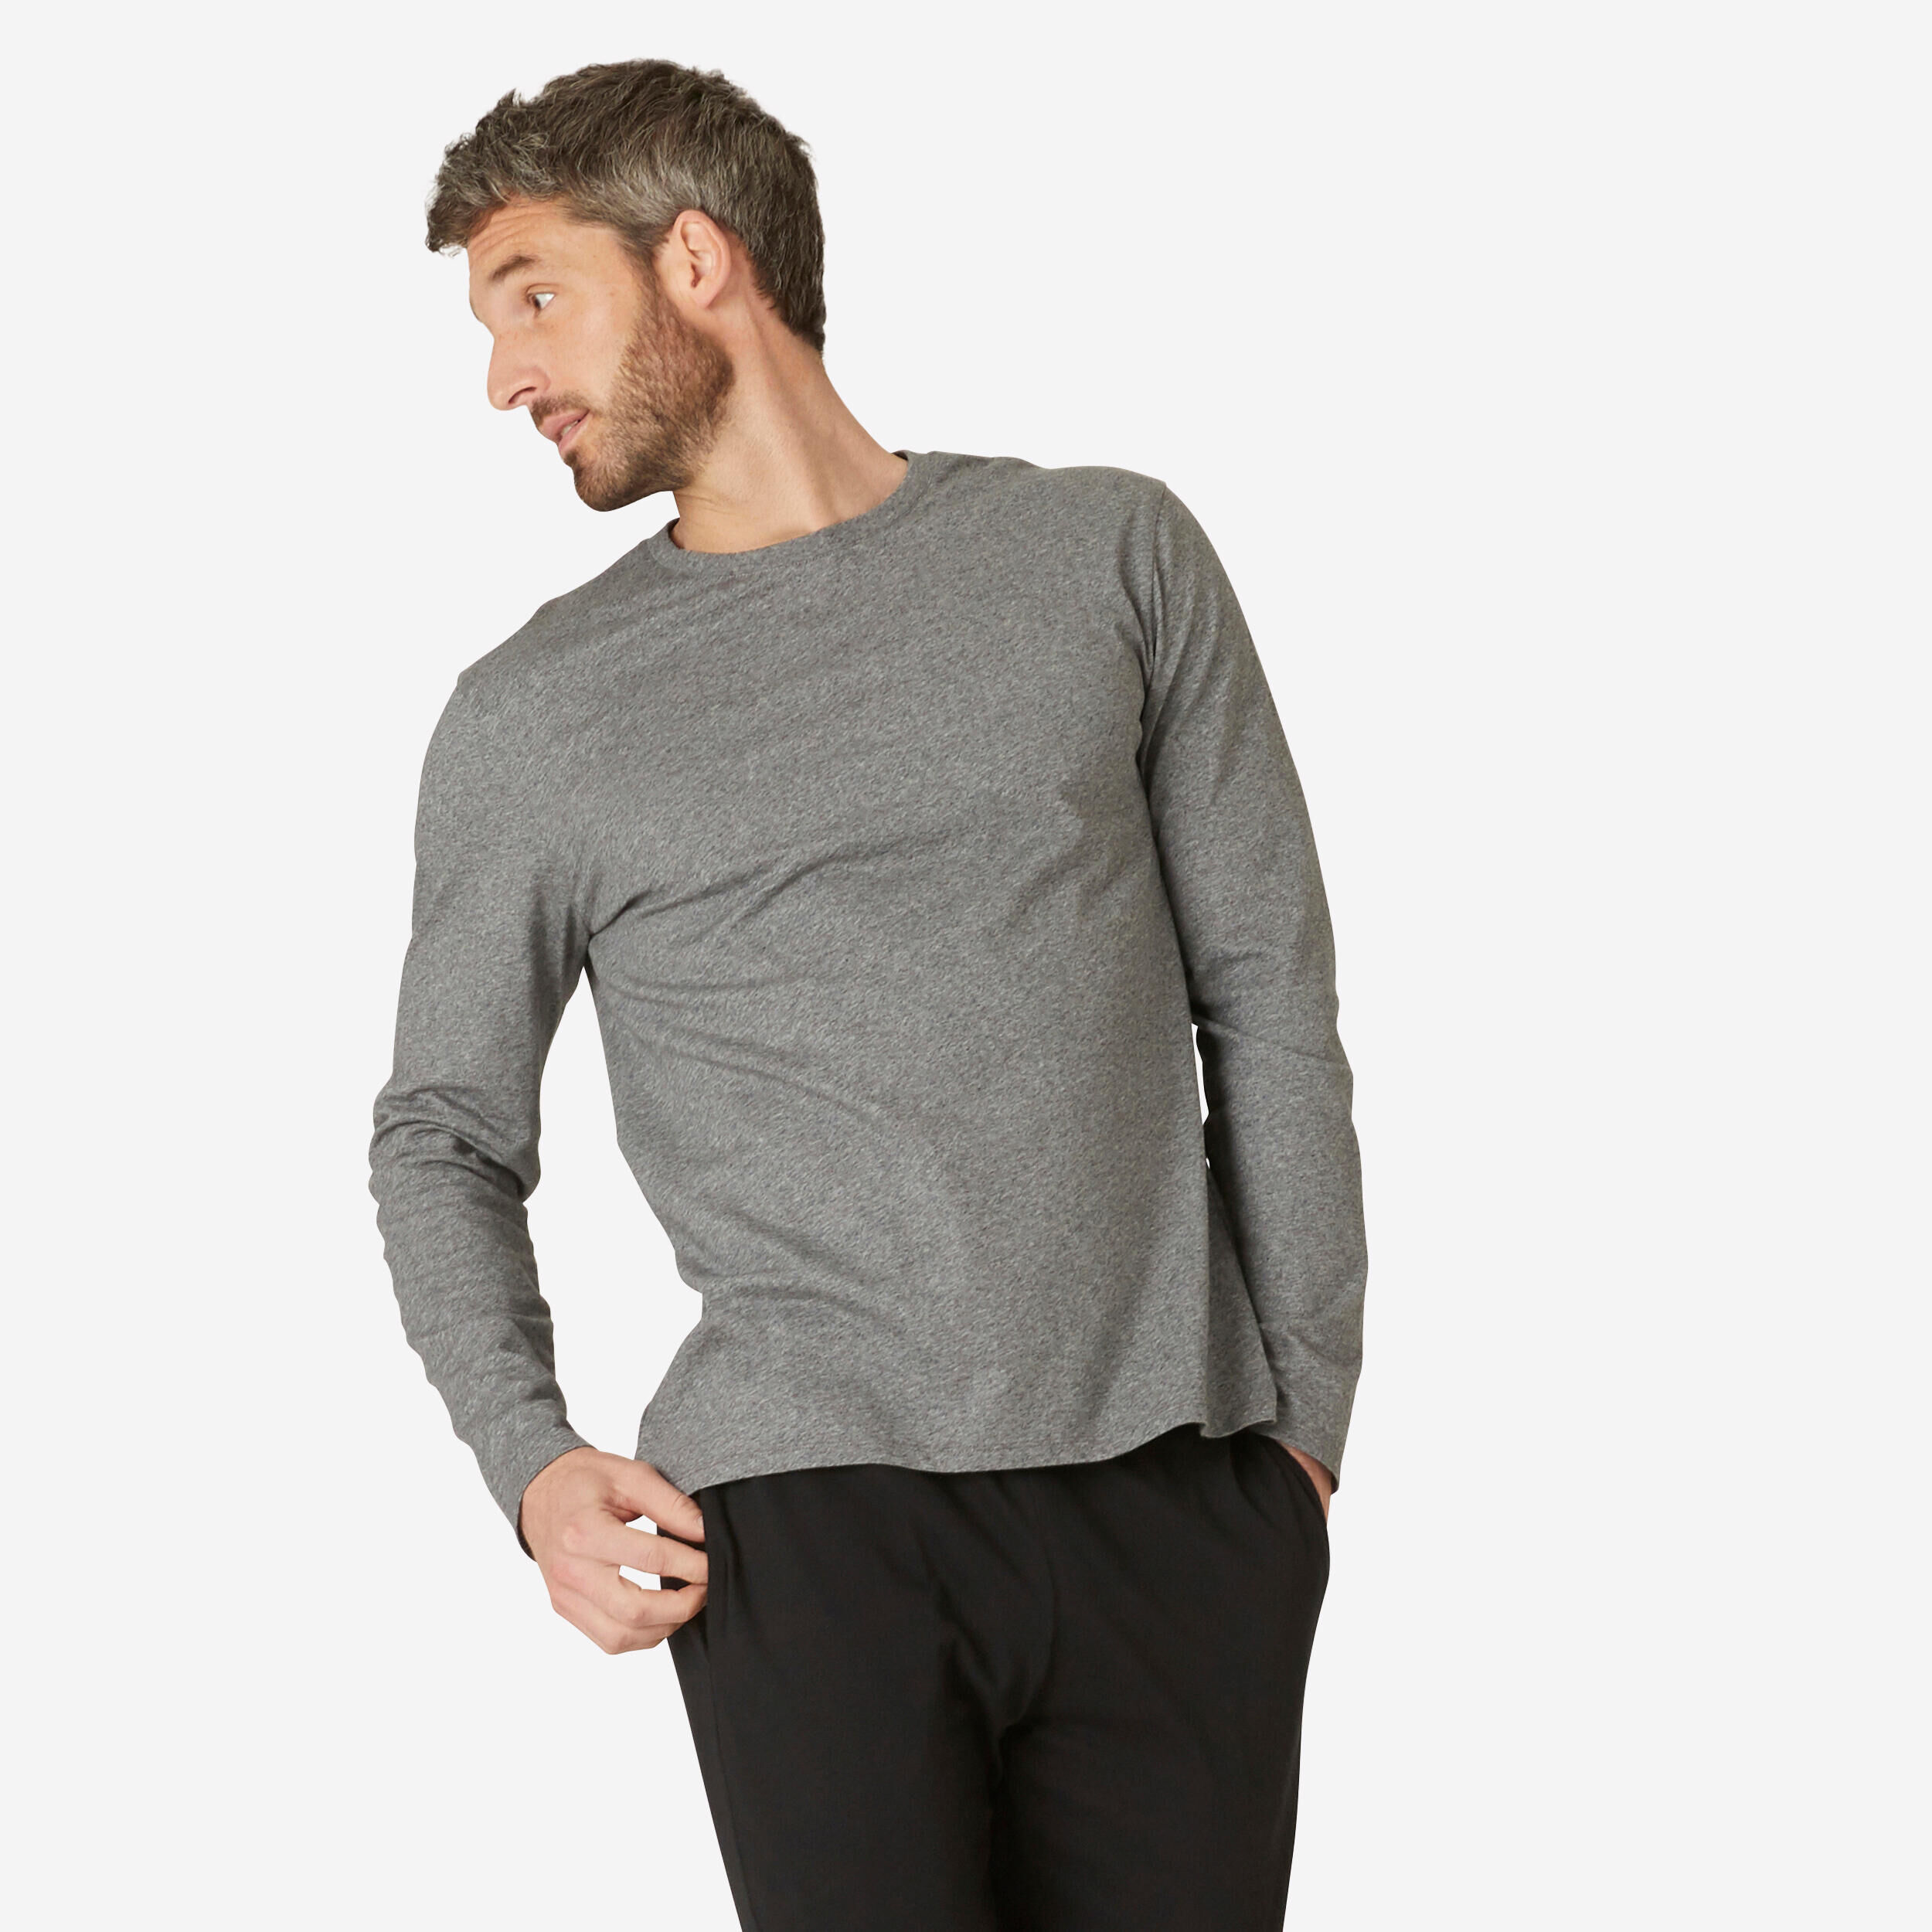 DOMYOS Men's Long-Sleeved Fitness T-Shirt 100 - Grey